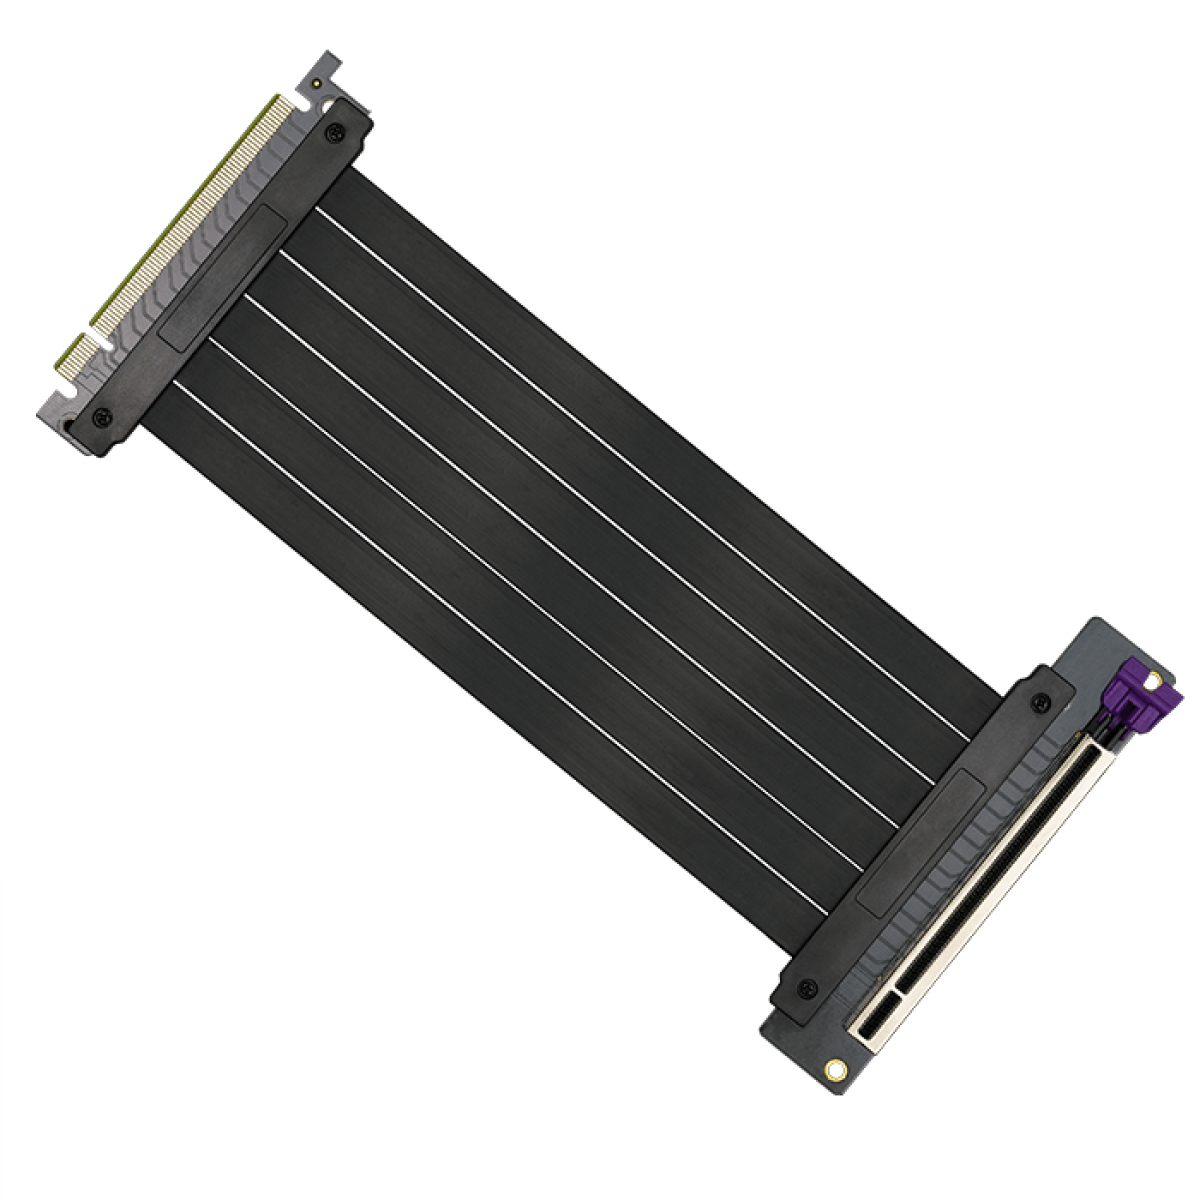 Cáp nối Cooler Master Riser Cable PCIe 3.0 x16 Ver. 2 - 300mm